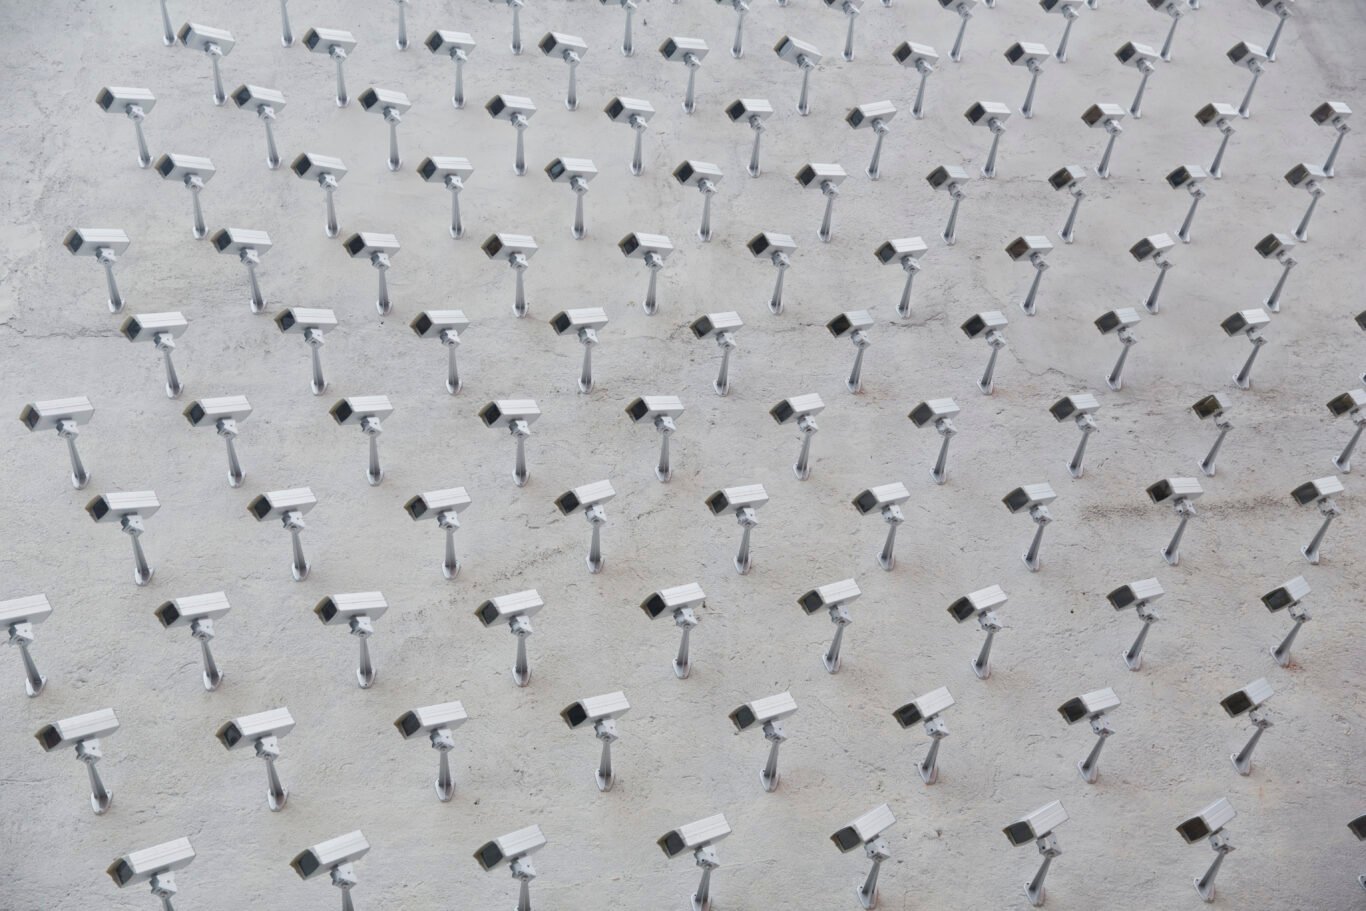 Art Installation of 150 fake security cameras on building facade in Madrid, Spain.